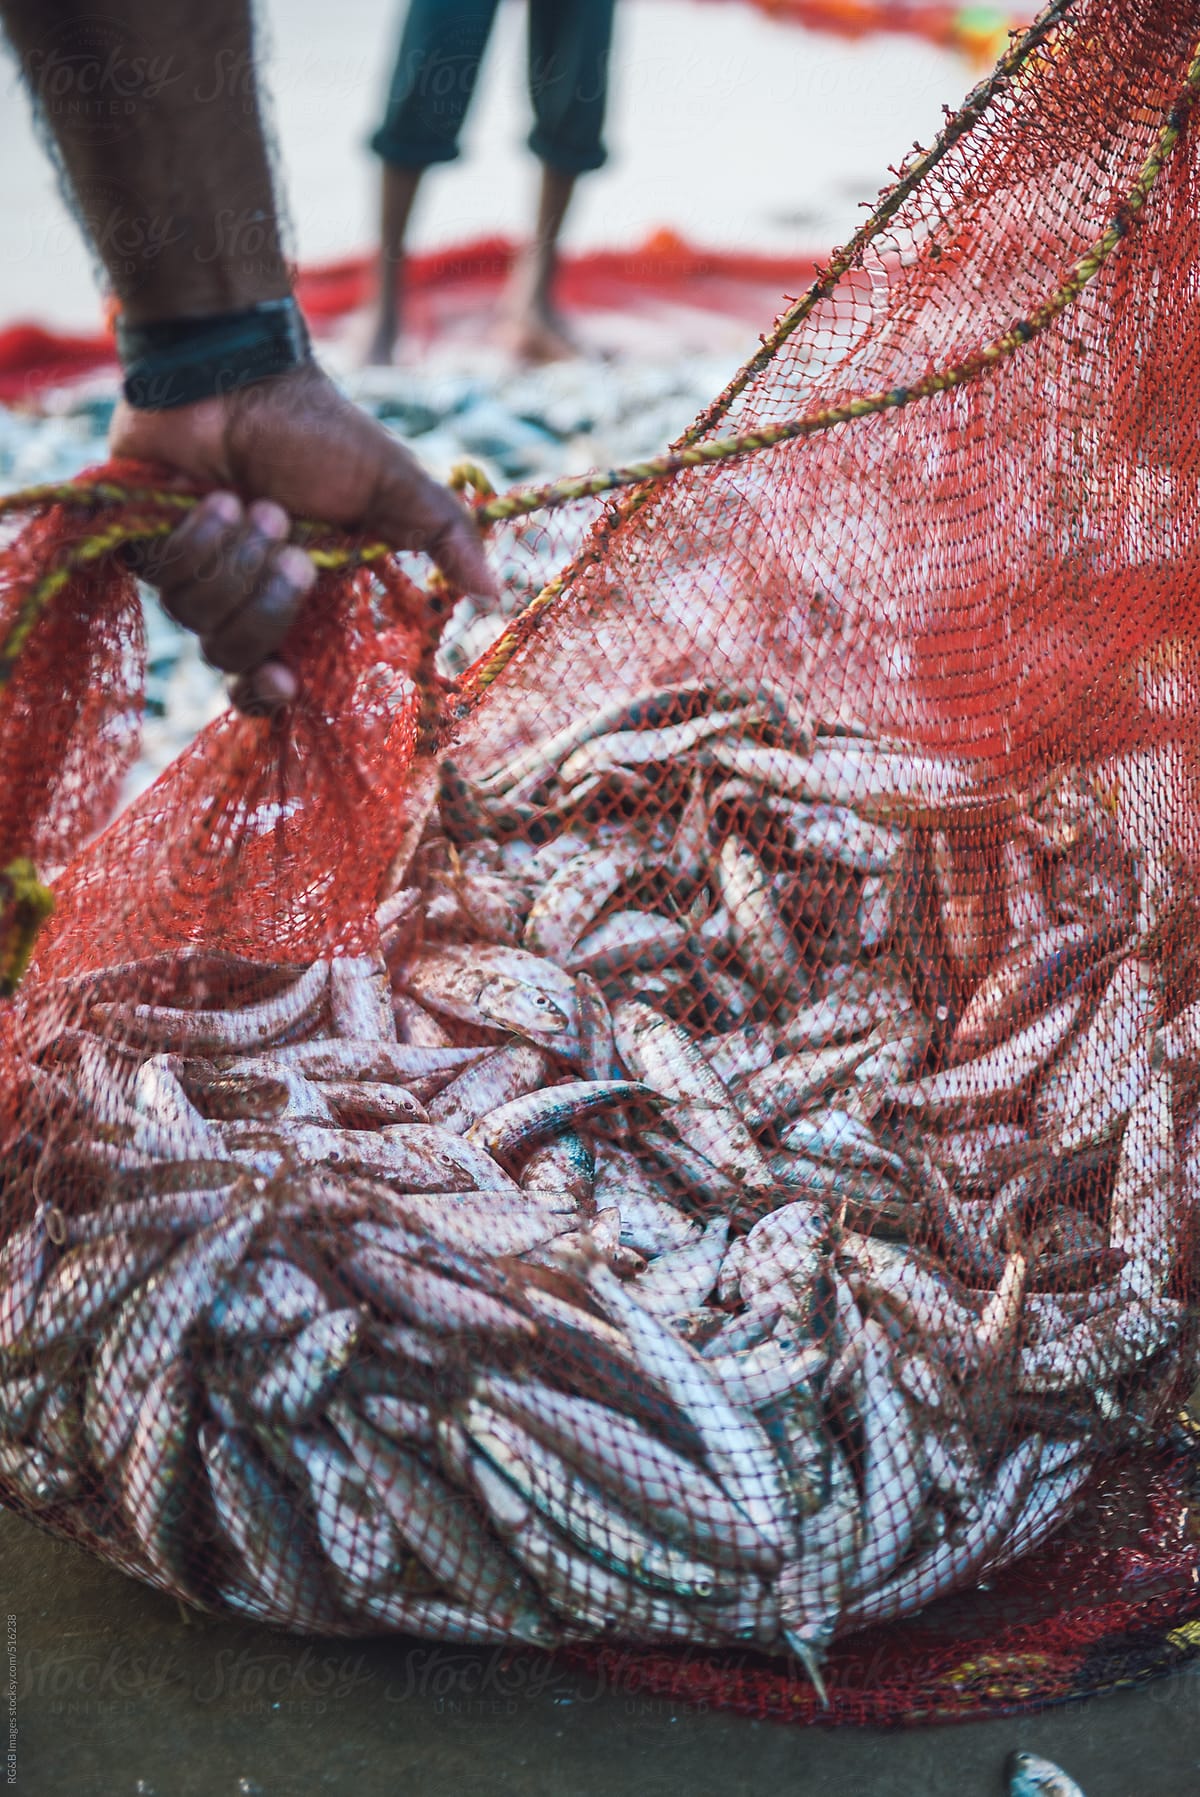 Caring a fishnet full of fish